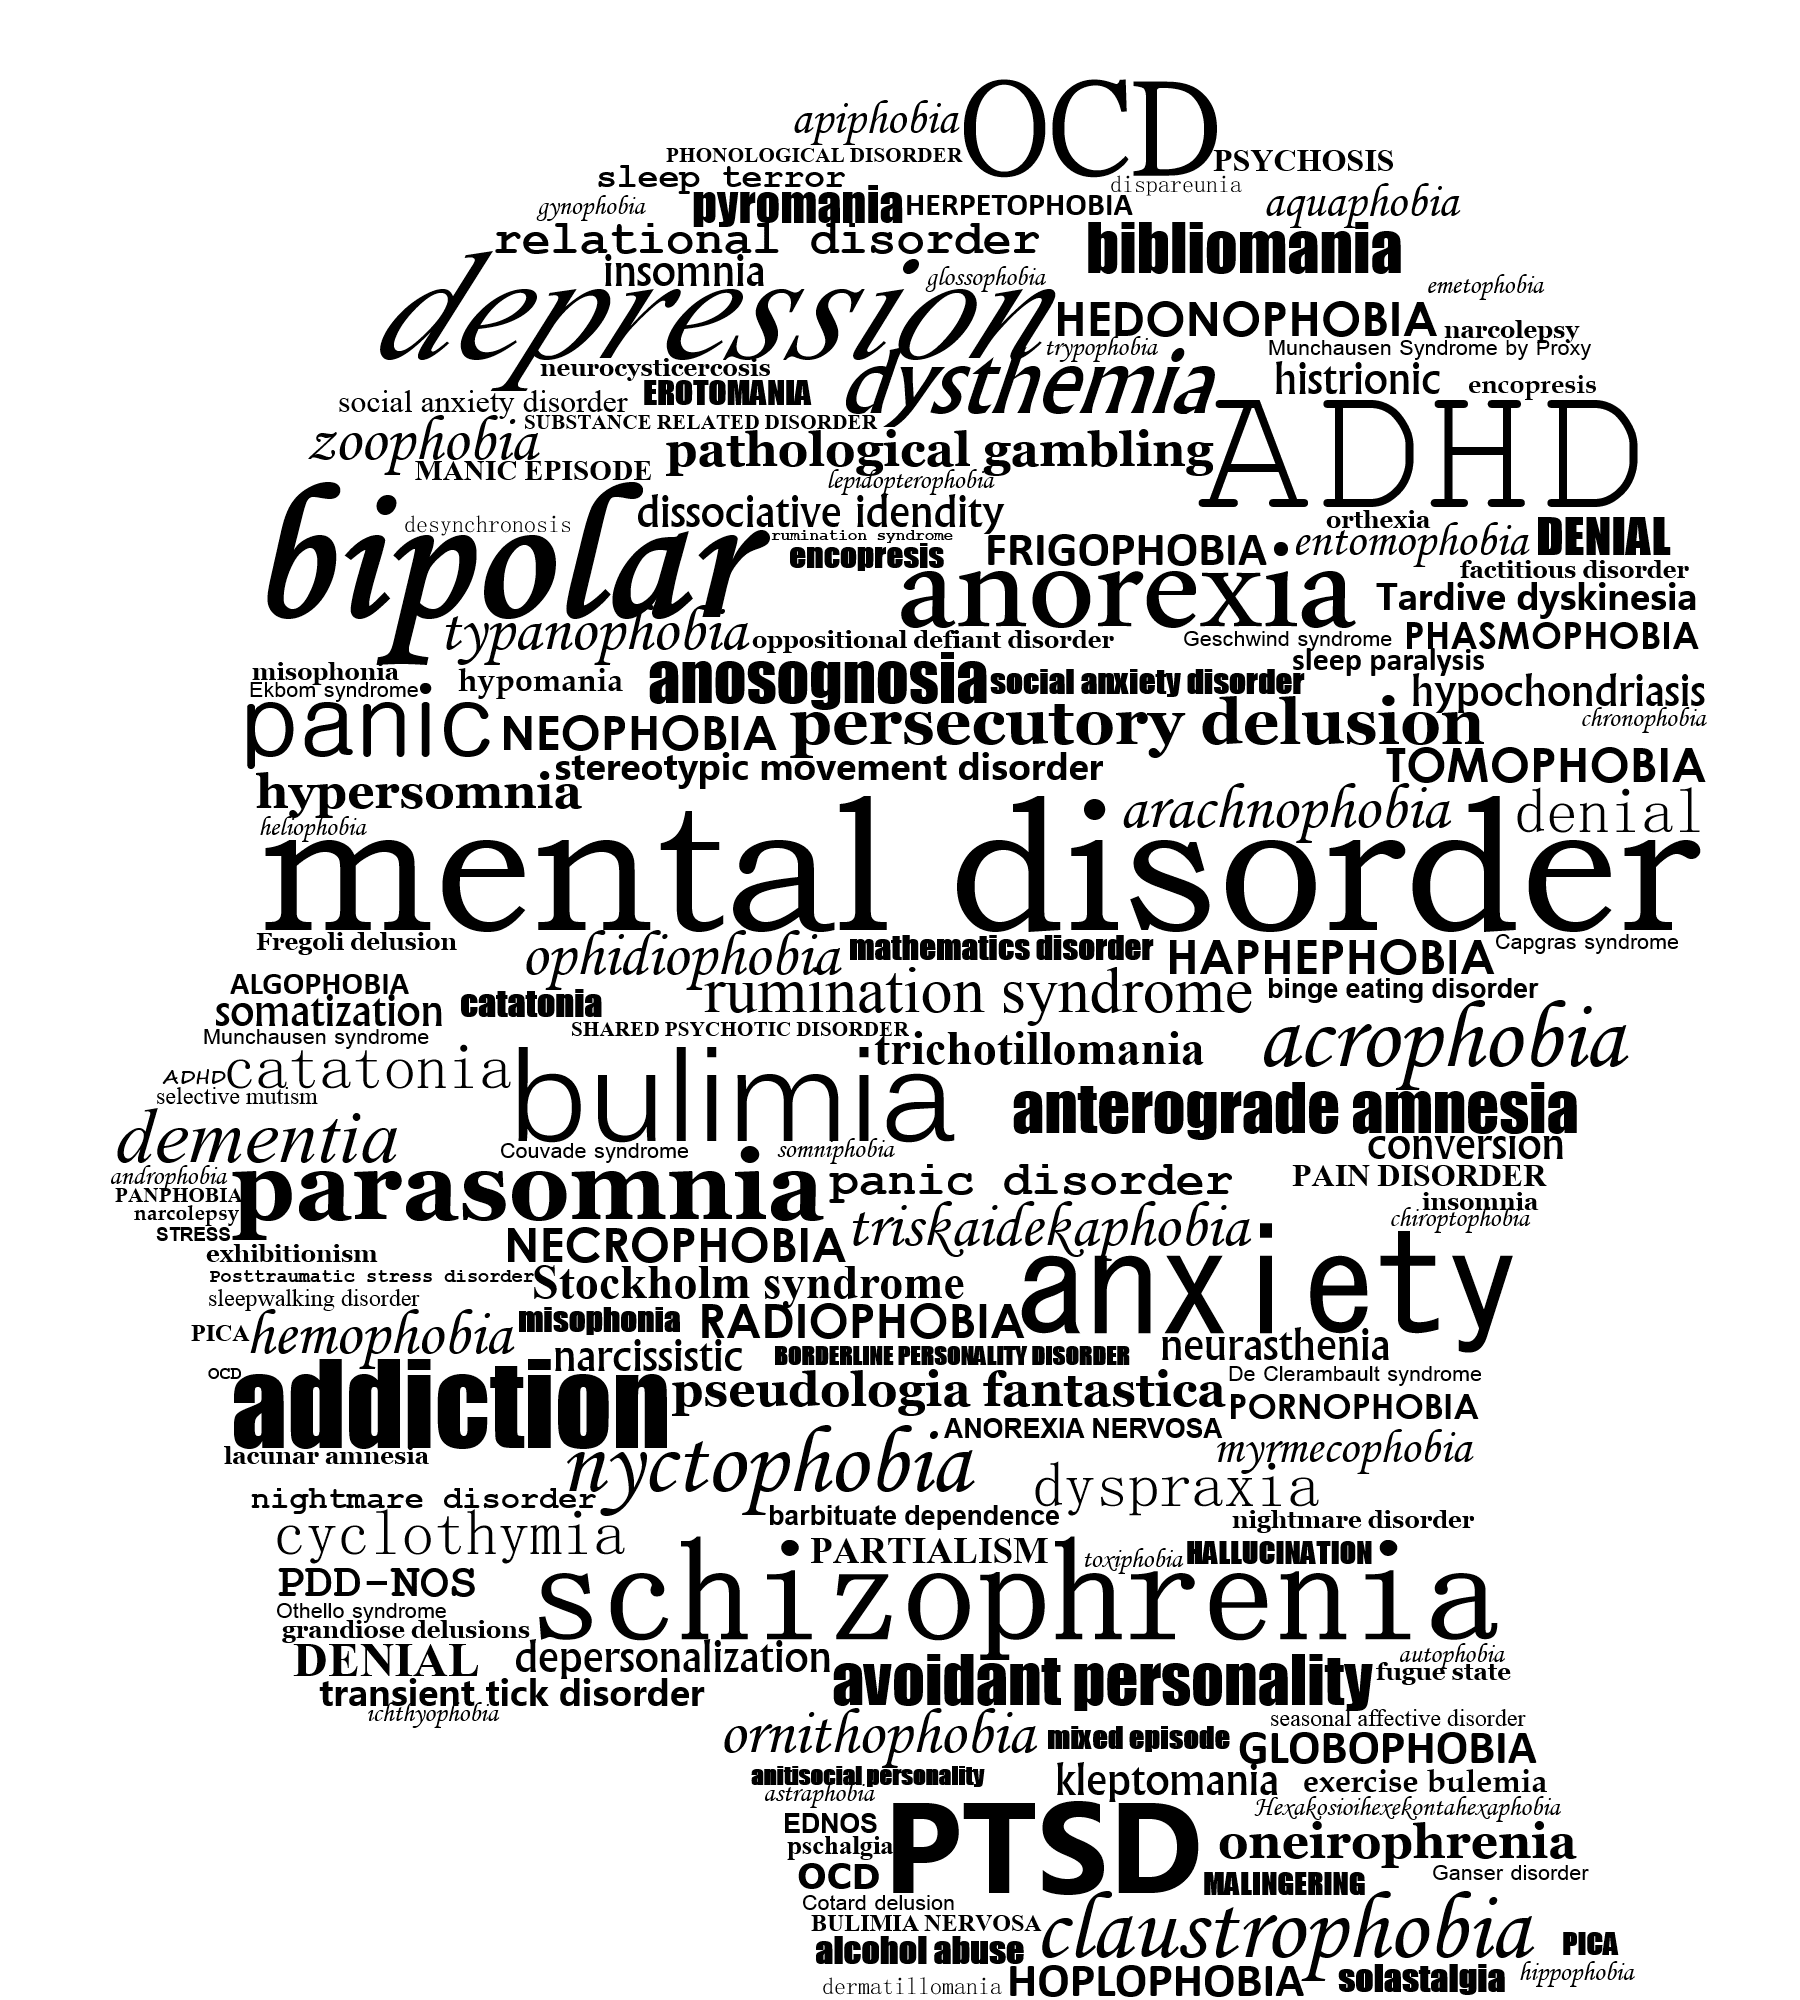 VA Disability for Somatic Symptom Disorder